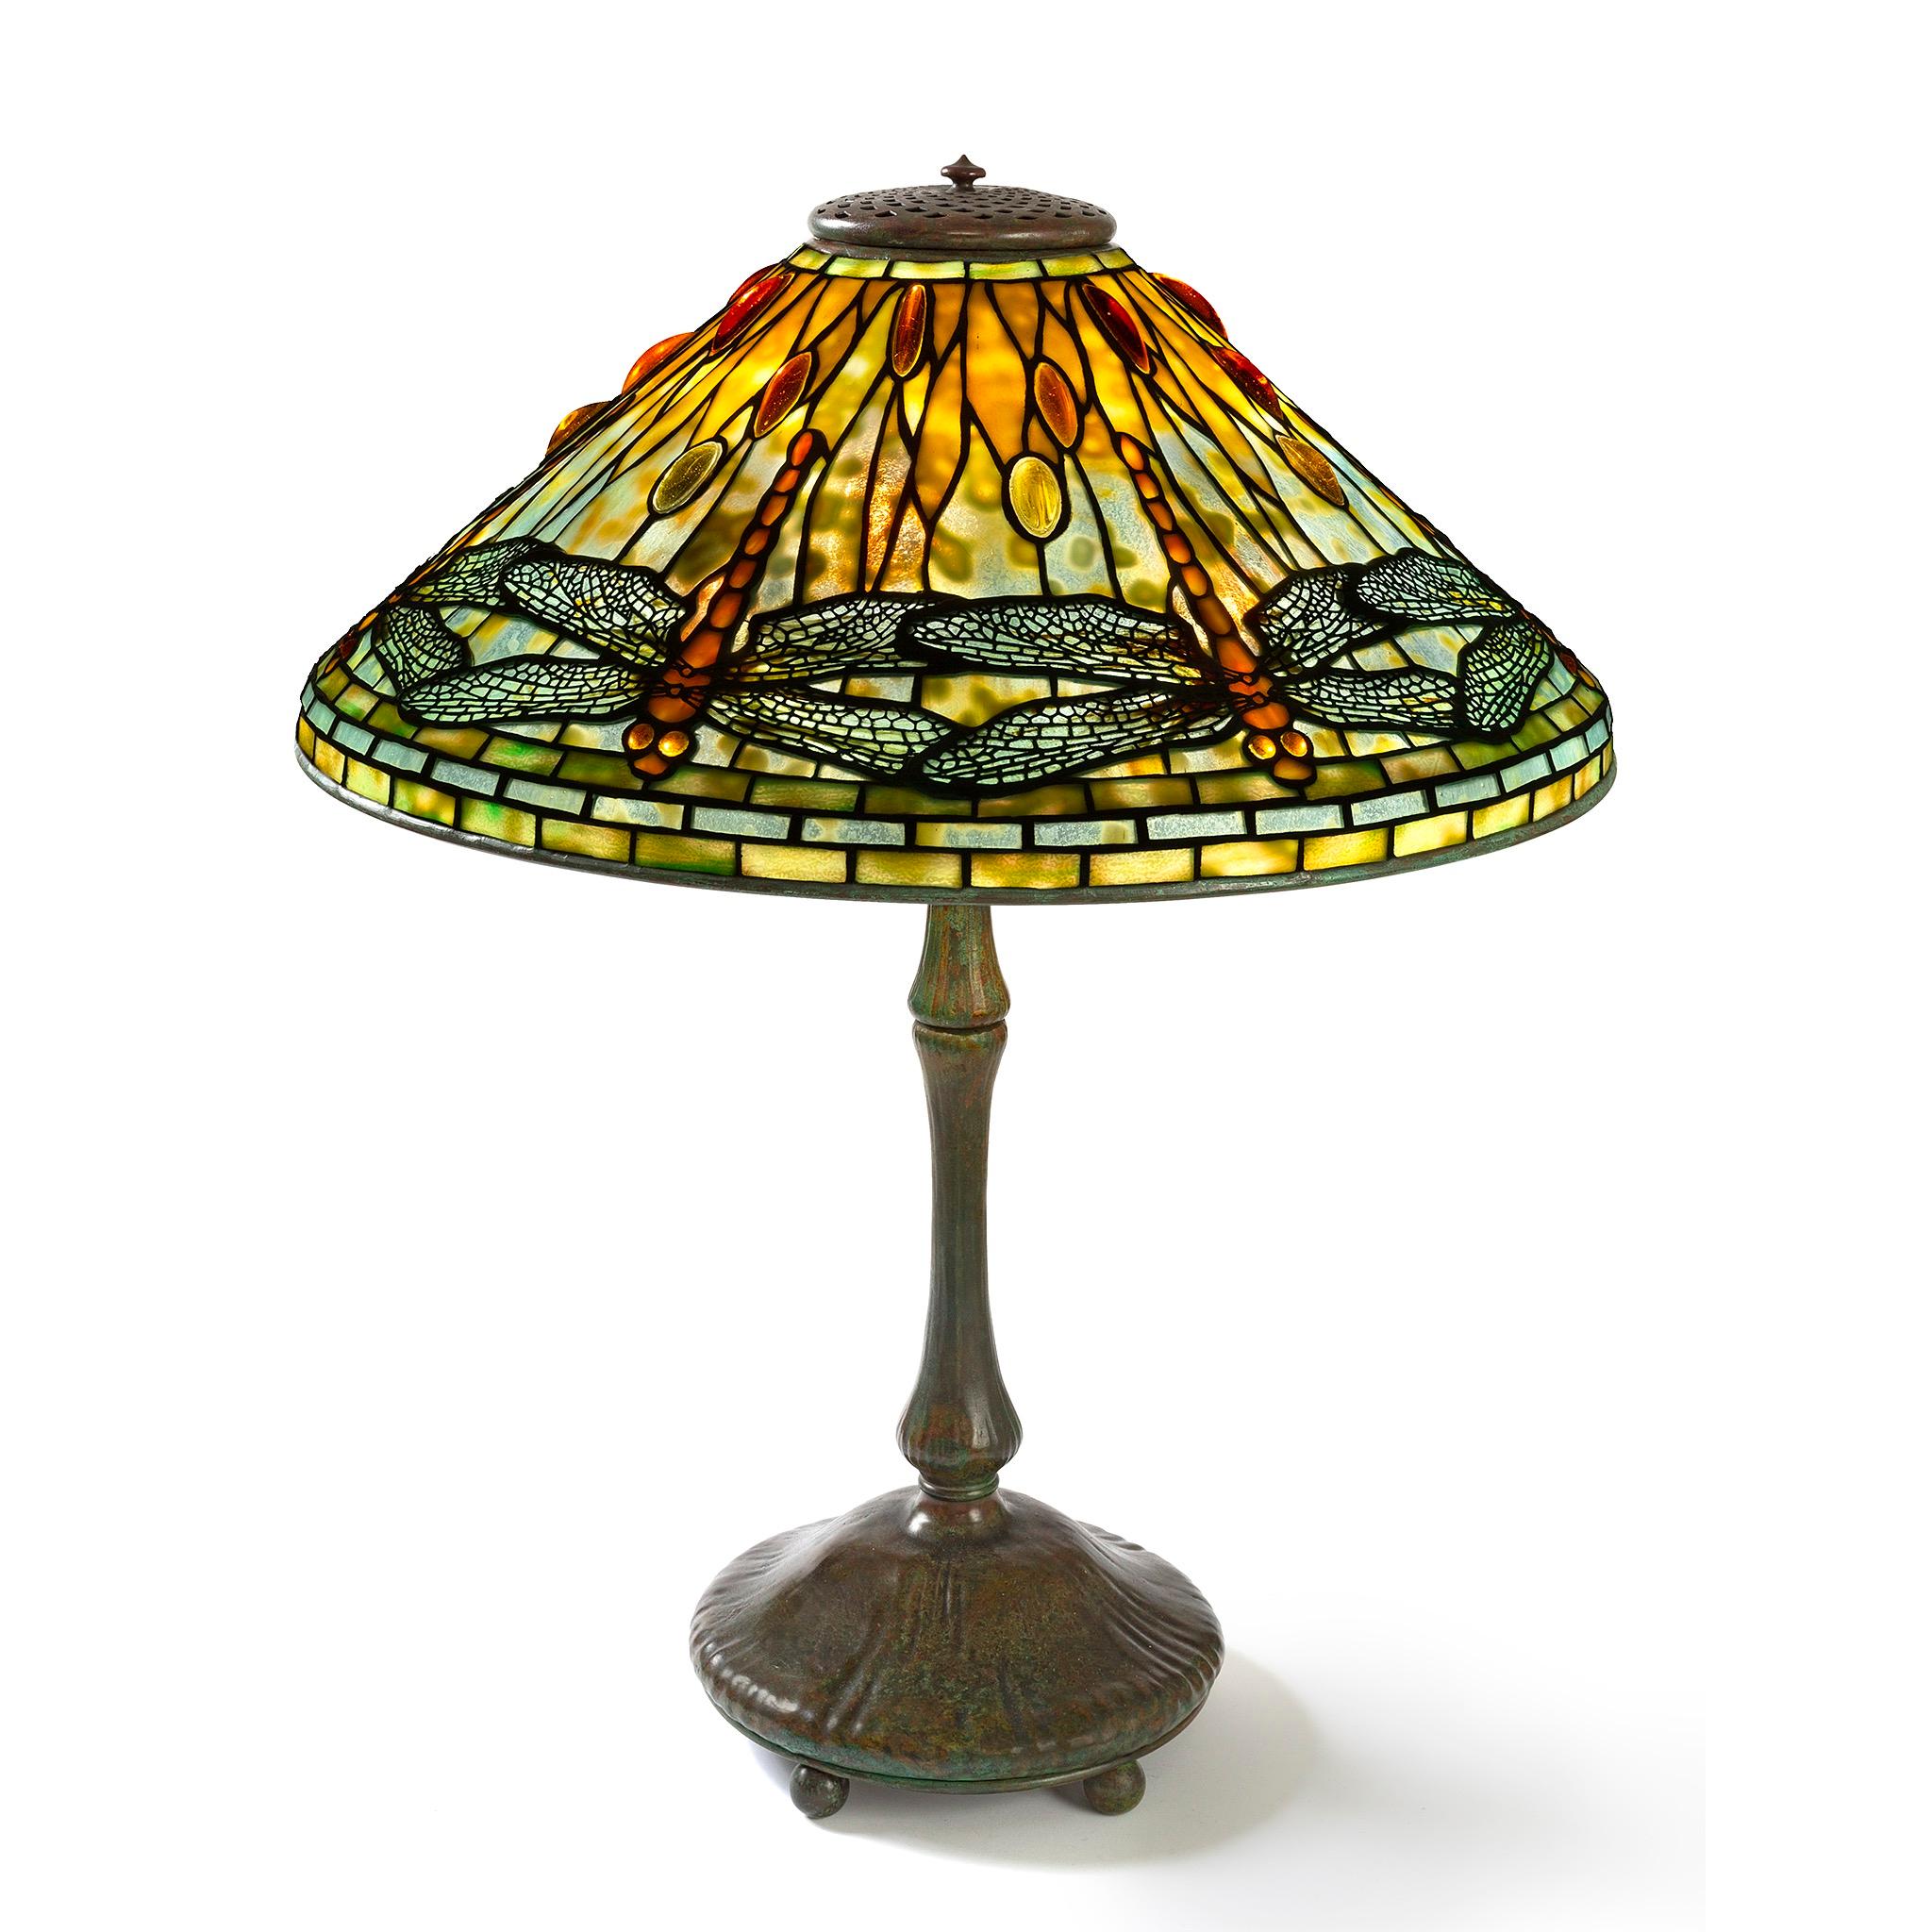 Art Nouveau Tiffany Studios New York “Dragonfly” Table Lamp